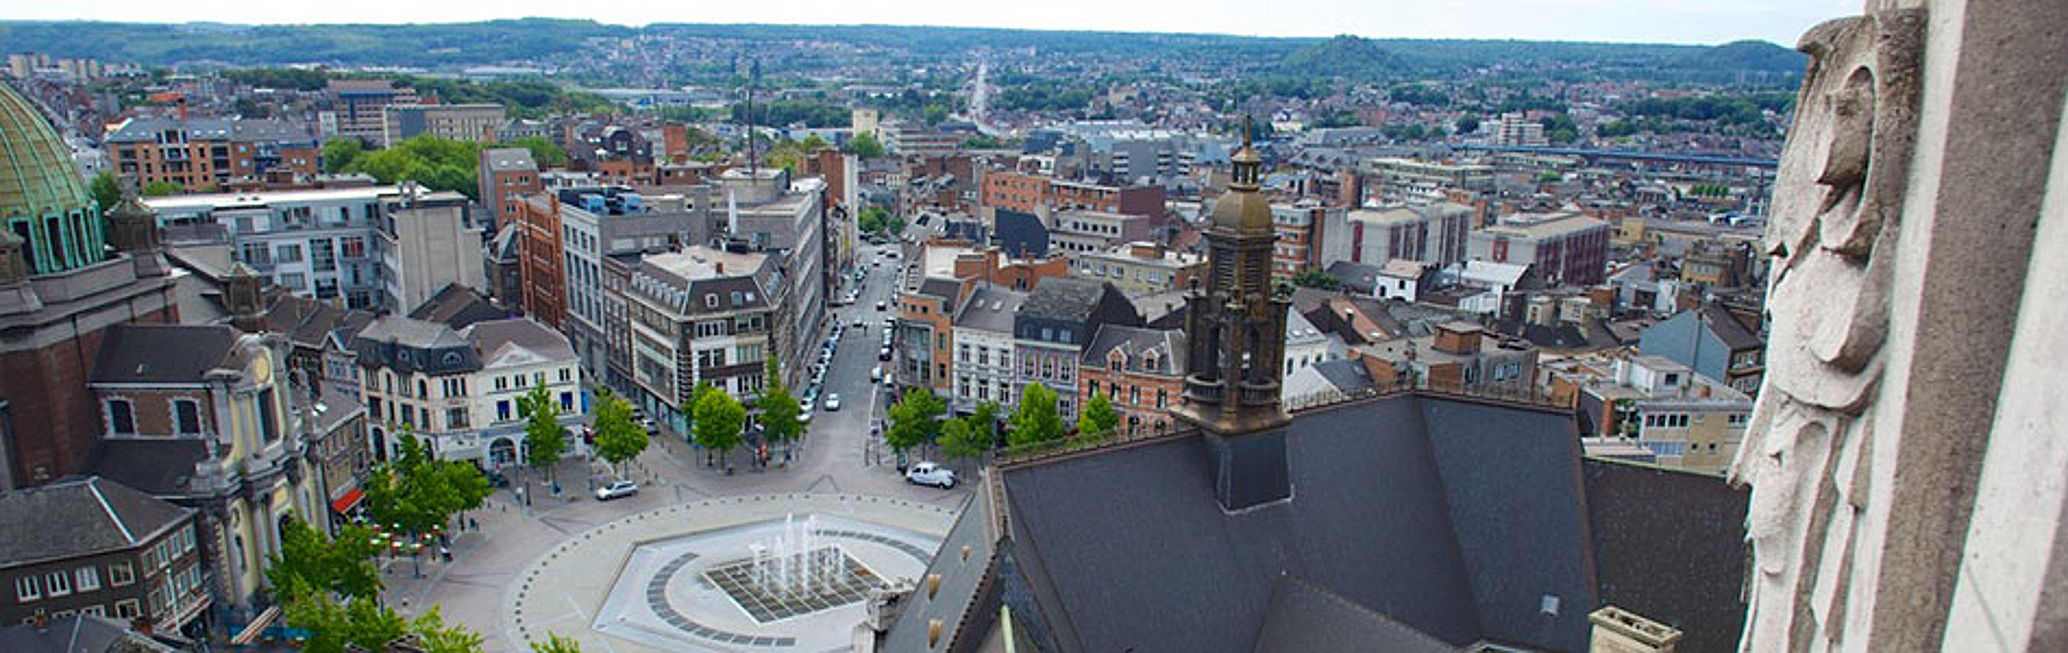  Gent
- Vue Charleroi 3 .jpg